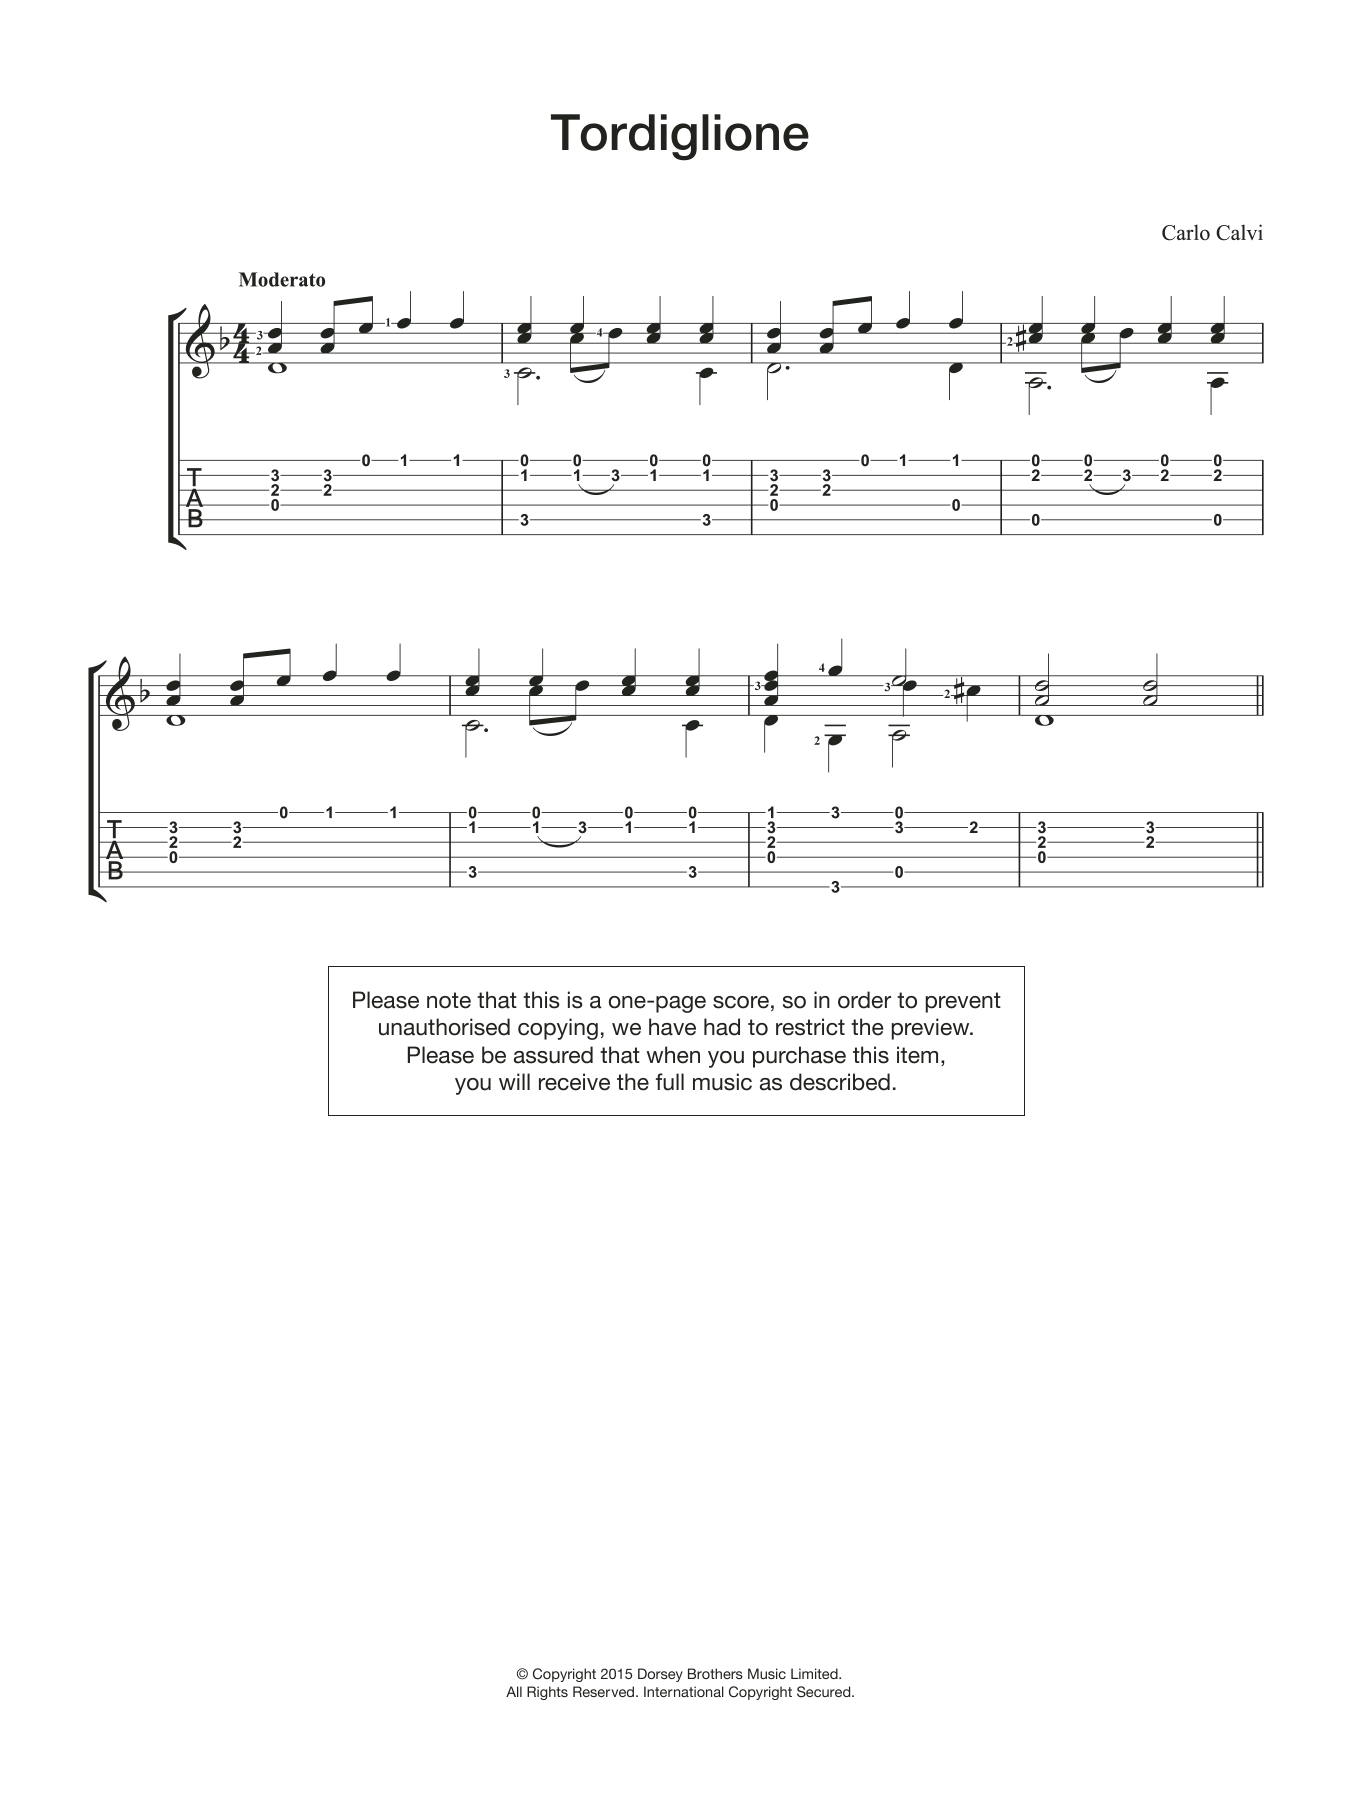 Carlo Calvi Tordiglione Sheet Music Notes & Chords for Guitar - Download or Print PDF